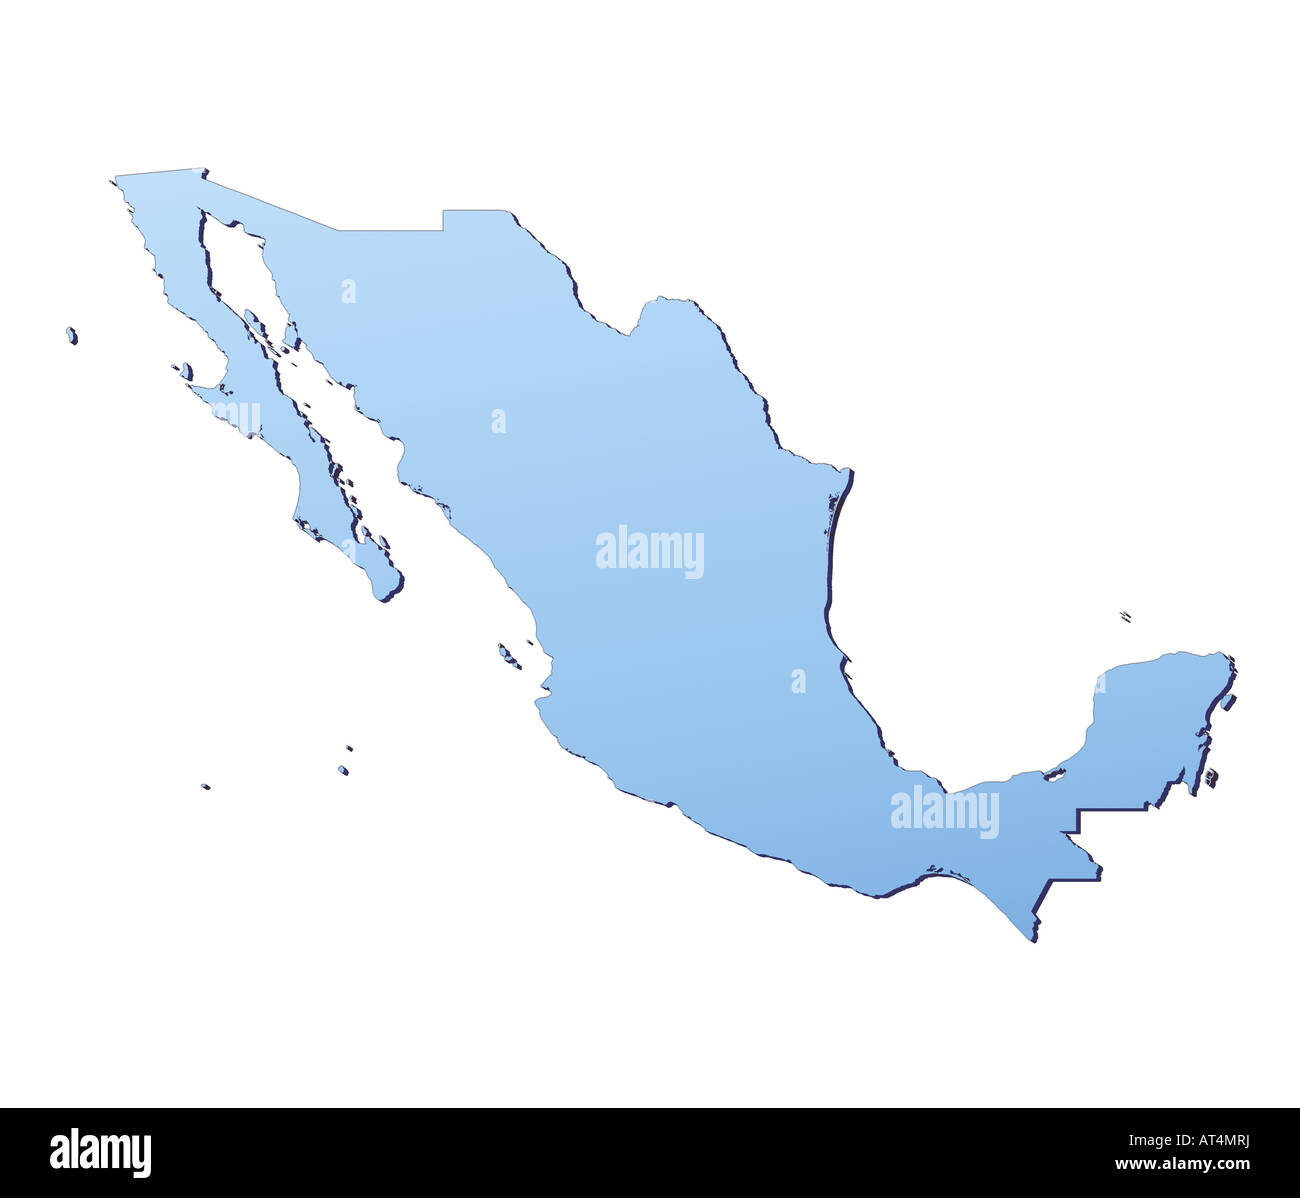 alamy stock photo map mexico